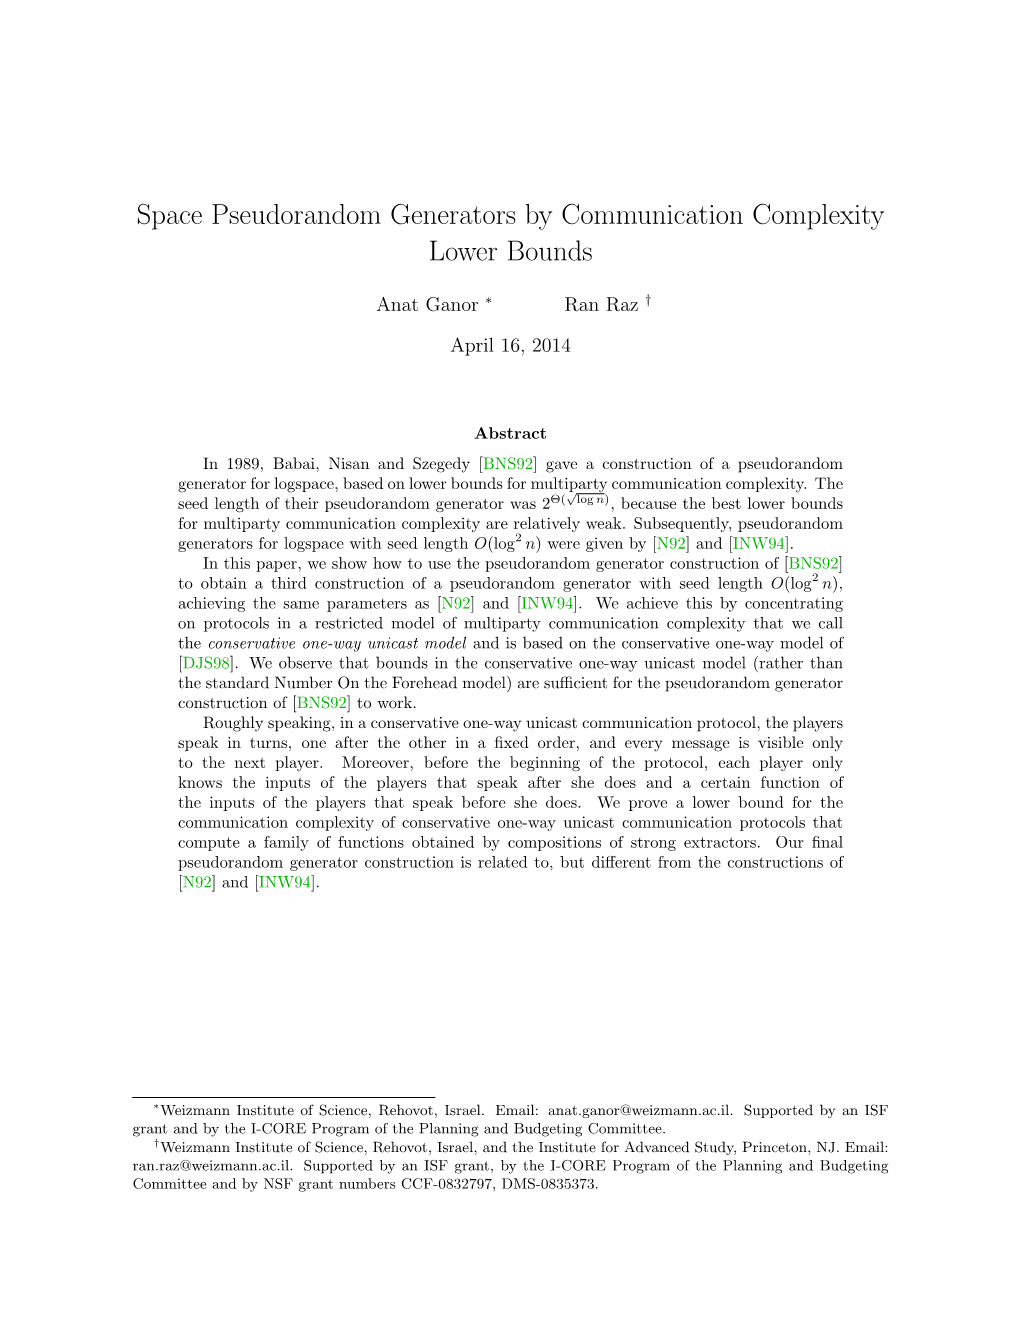 Space Pseudorandom Generators by Communication Complexity Lower Bounds